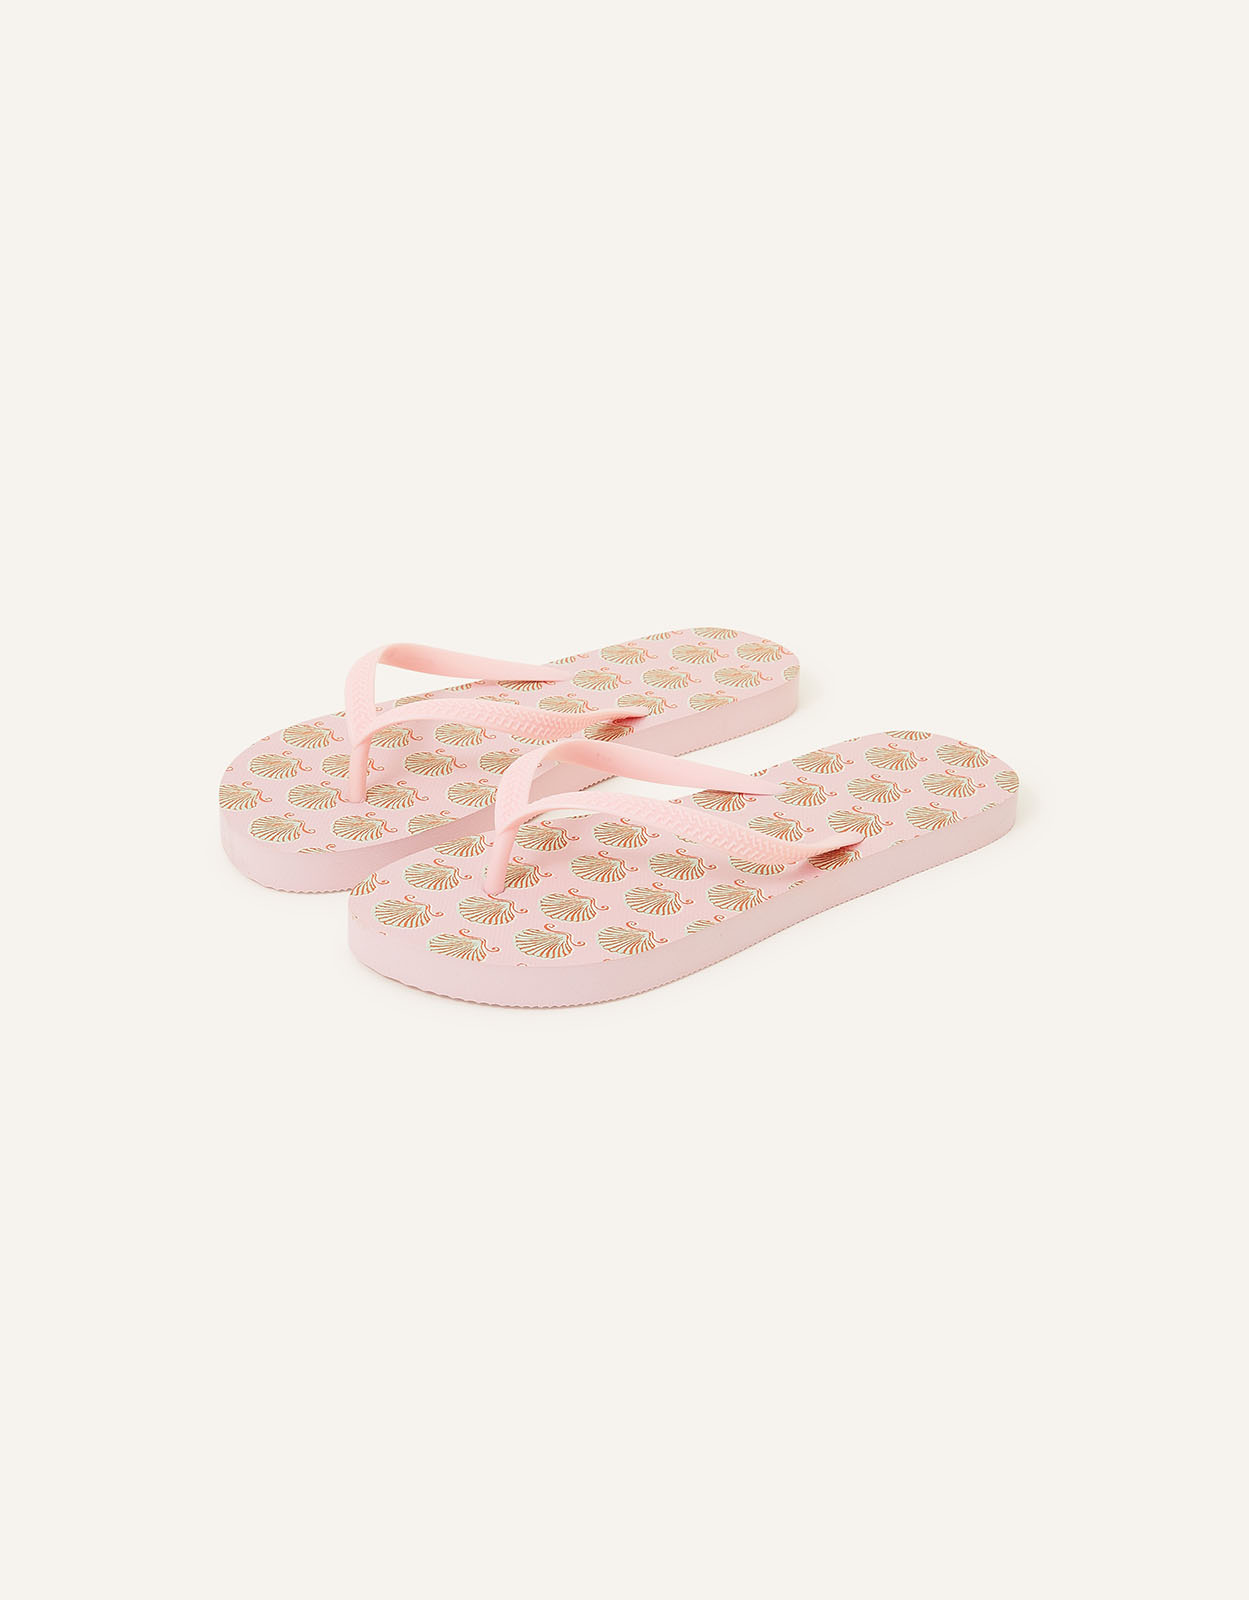 Accessorize Women's Pink Classic Shell Print Flip Flops, Size: M